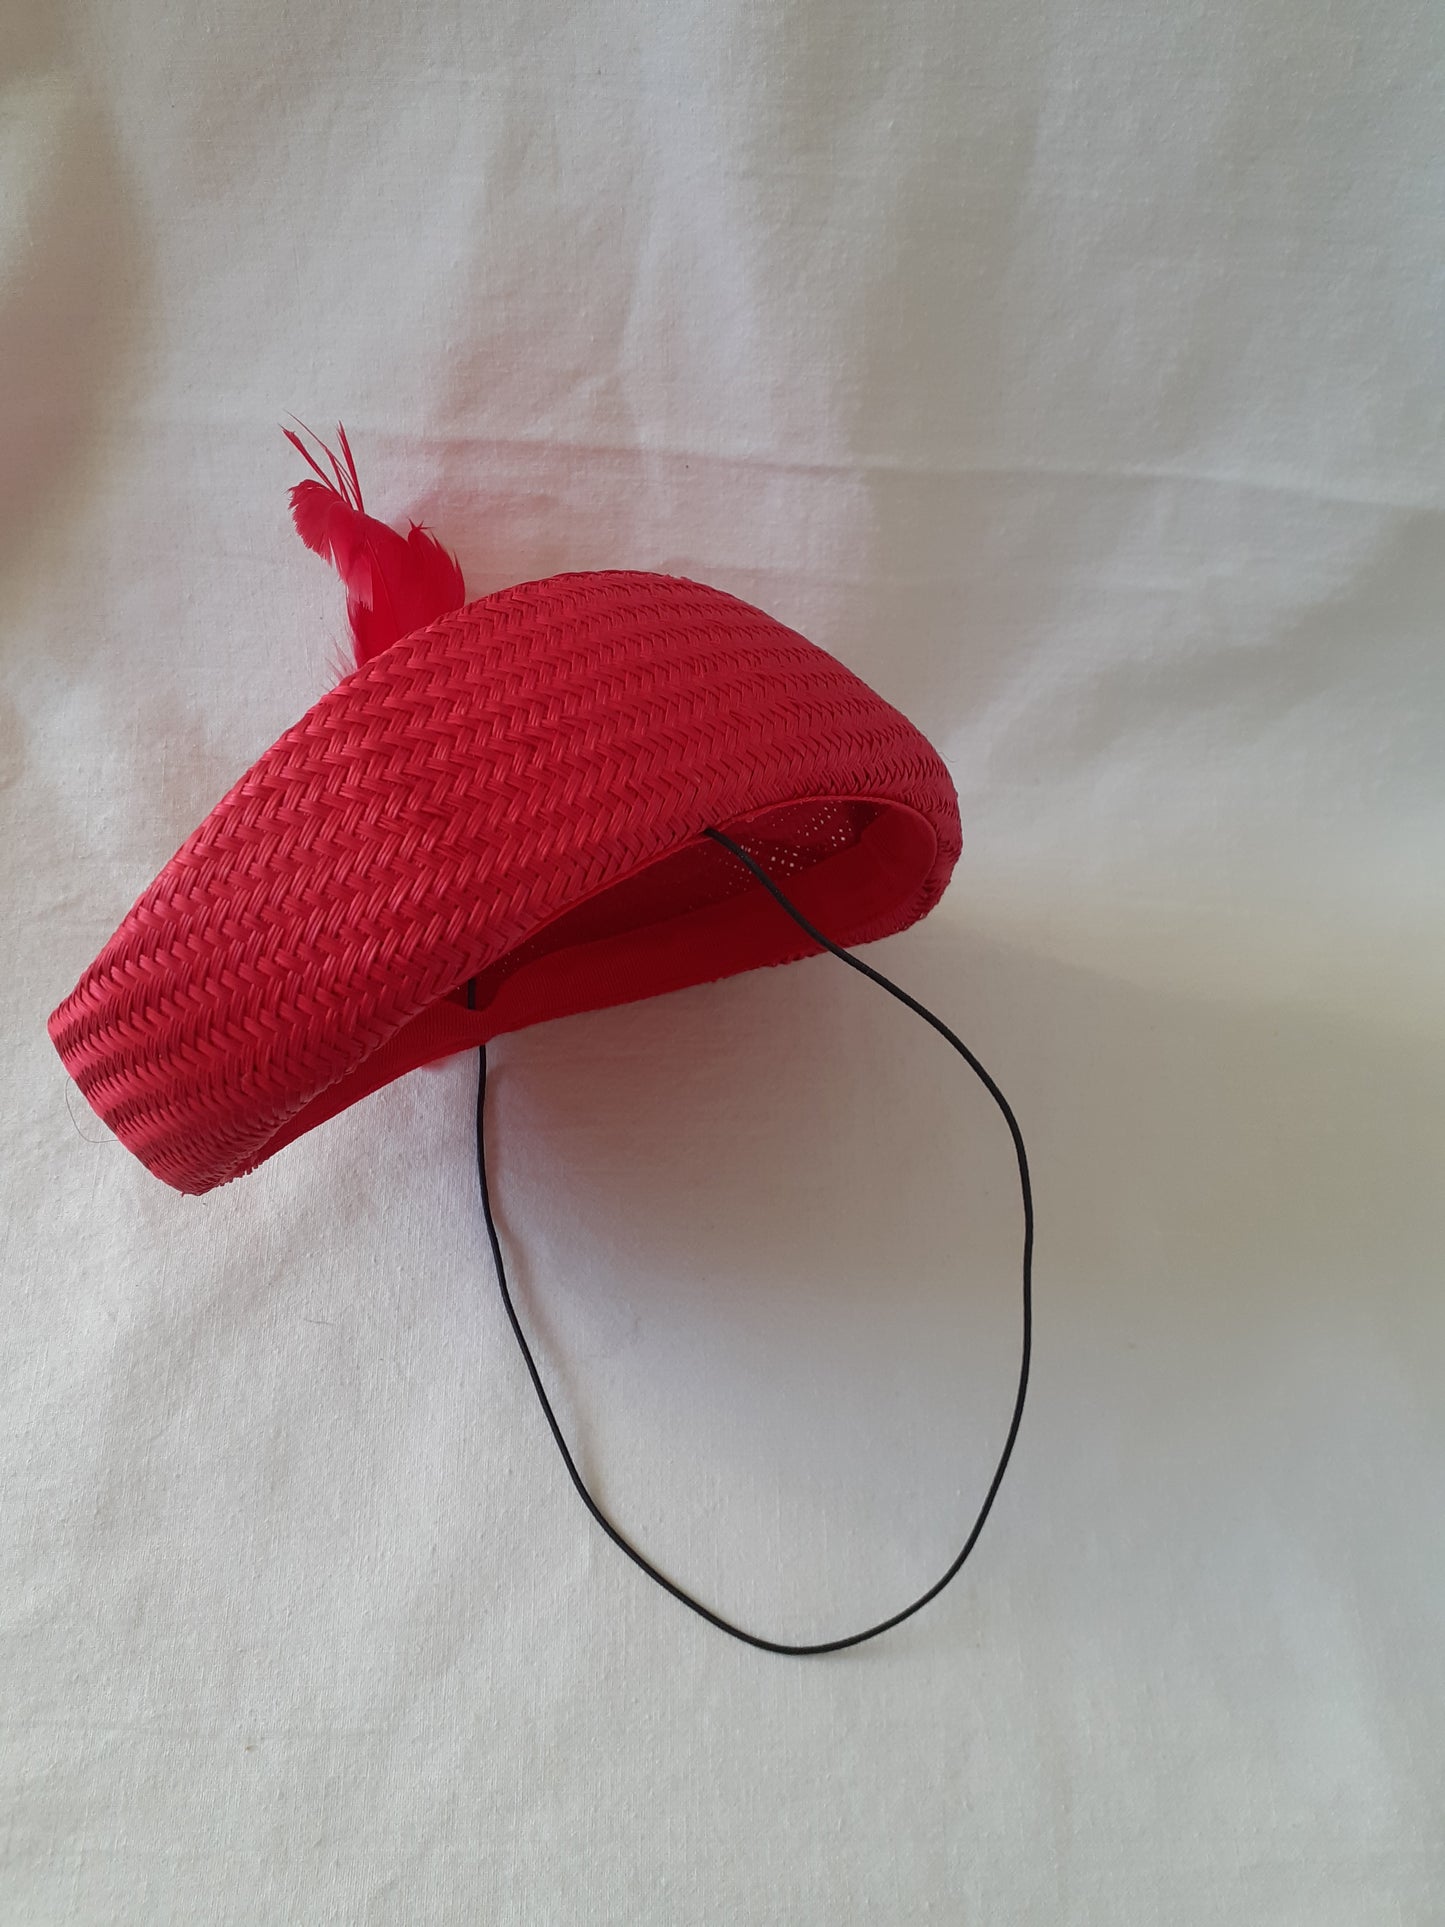 Red 'air hostess' hat